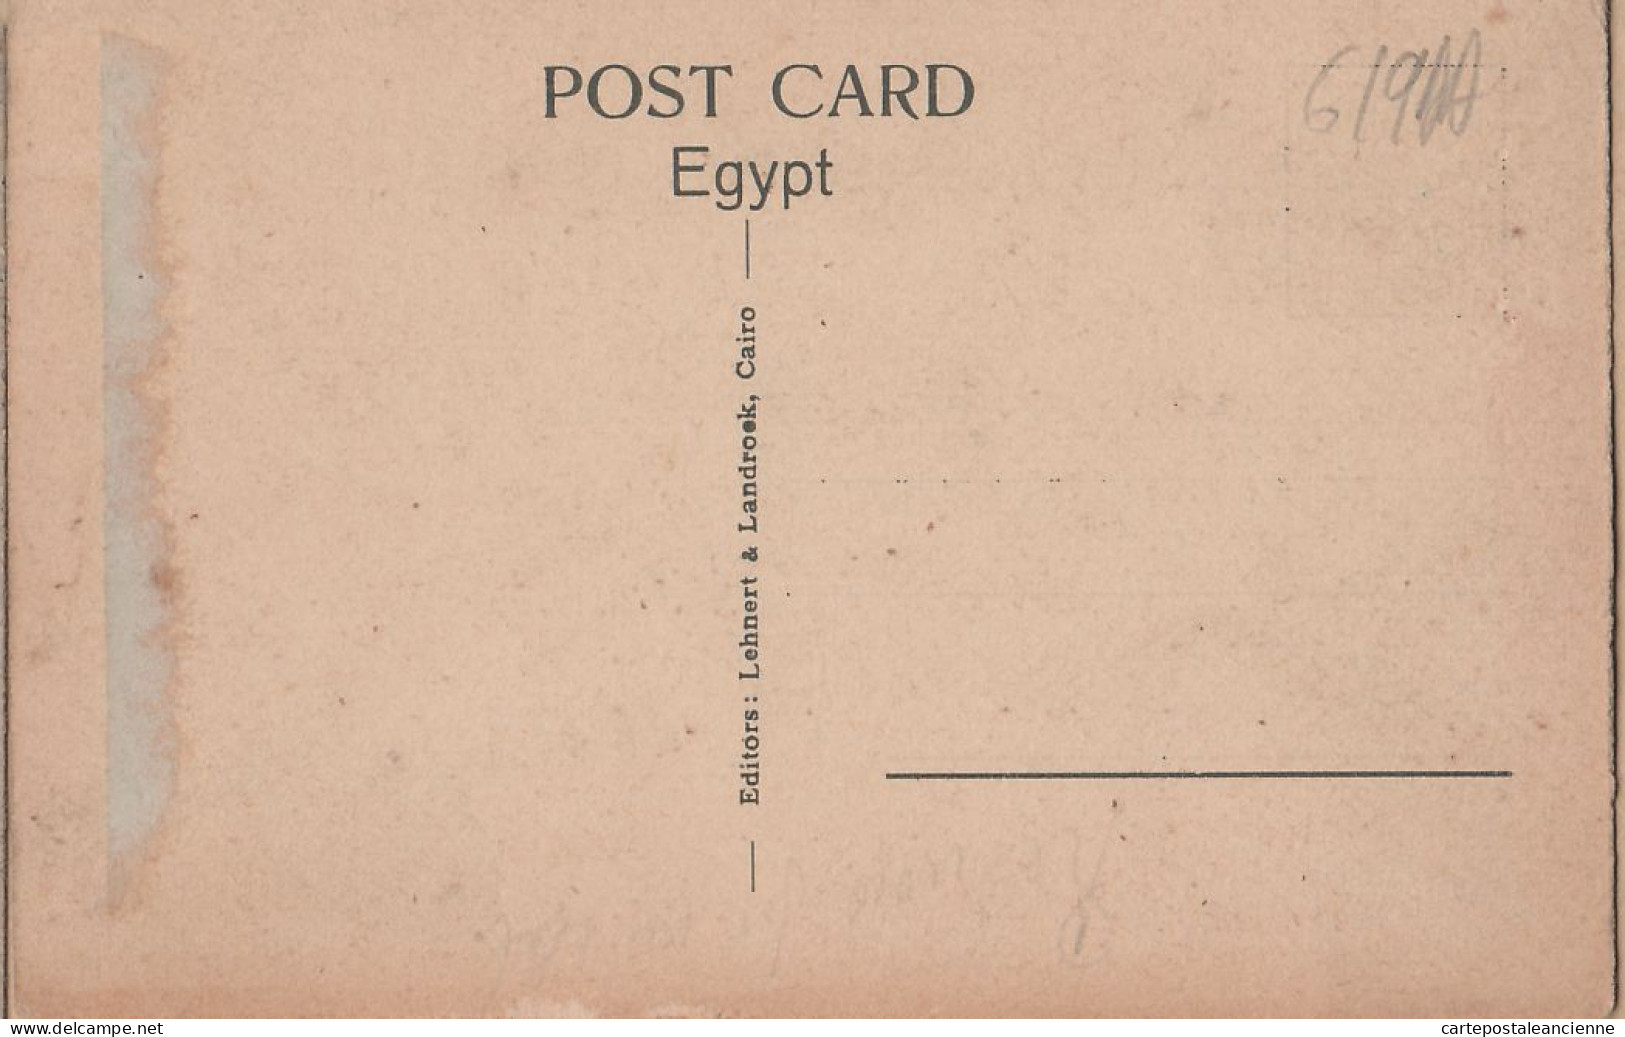 01833 / Egypt CAIRO In The Bazaars LE CAIRE Les Bazars 1920s - LEHNERT LANDROCK 1117 Egypte Agypten Egipto Egitto - Le Caire